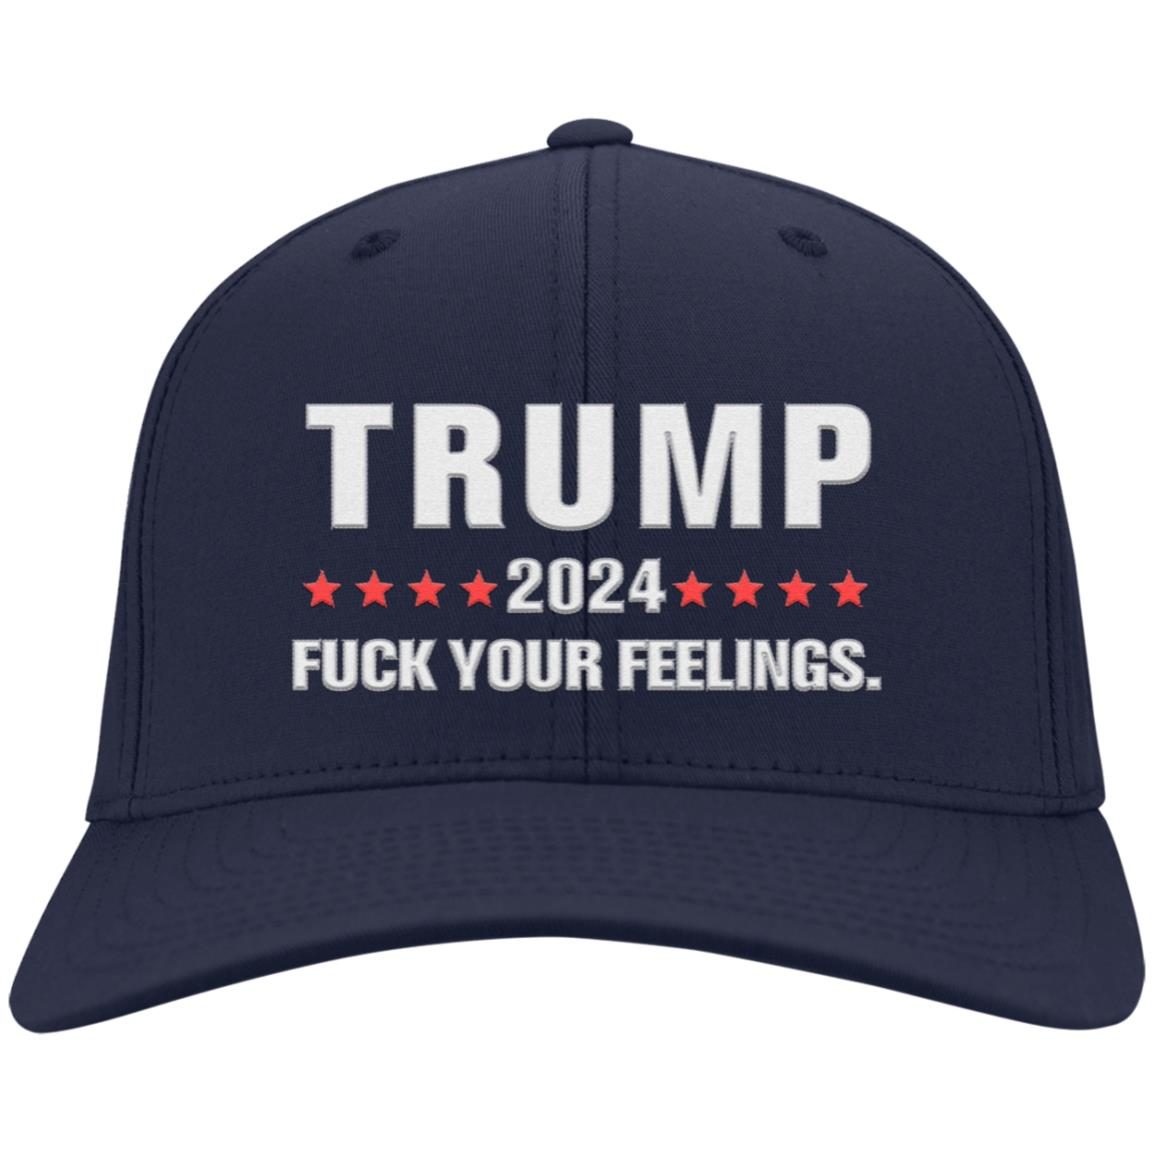 Tr*mp 2024 f*ck your feelings hat cap